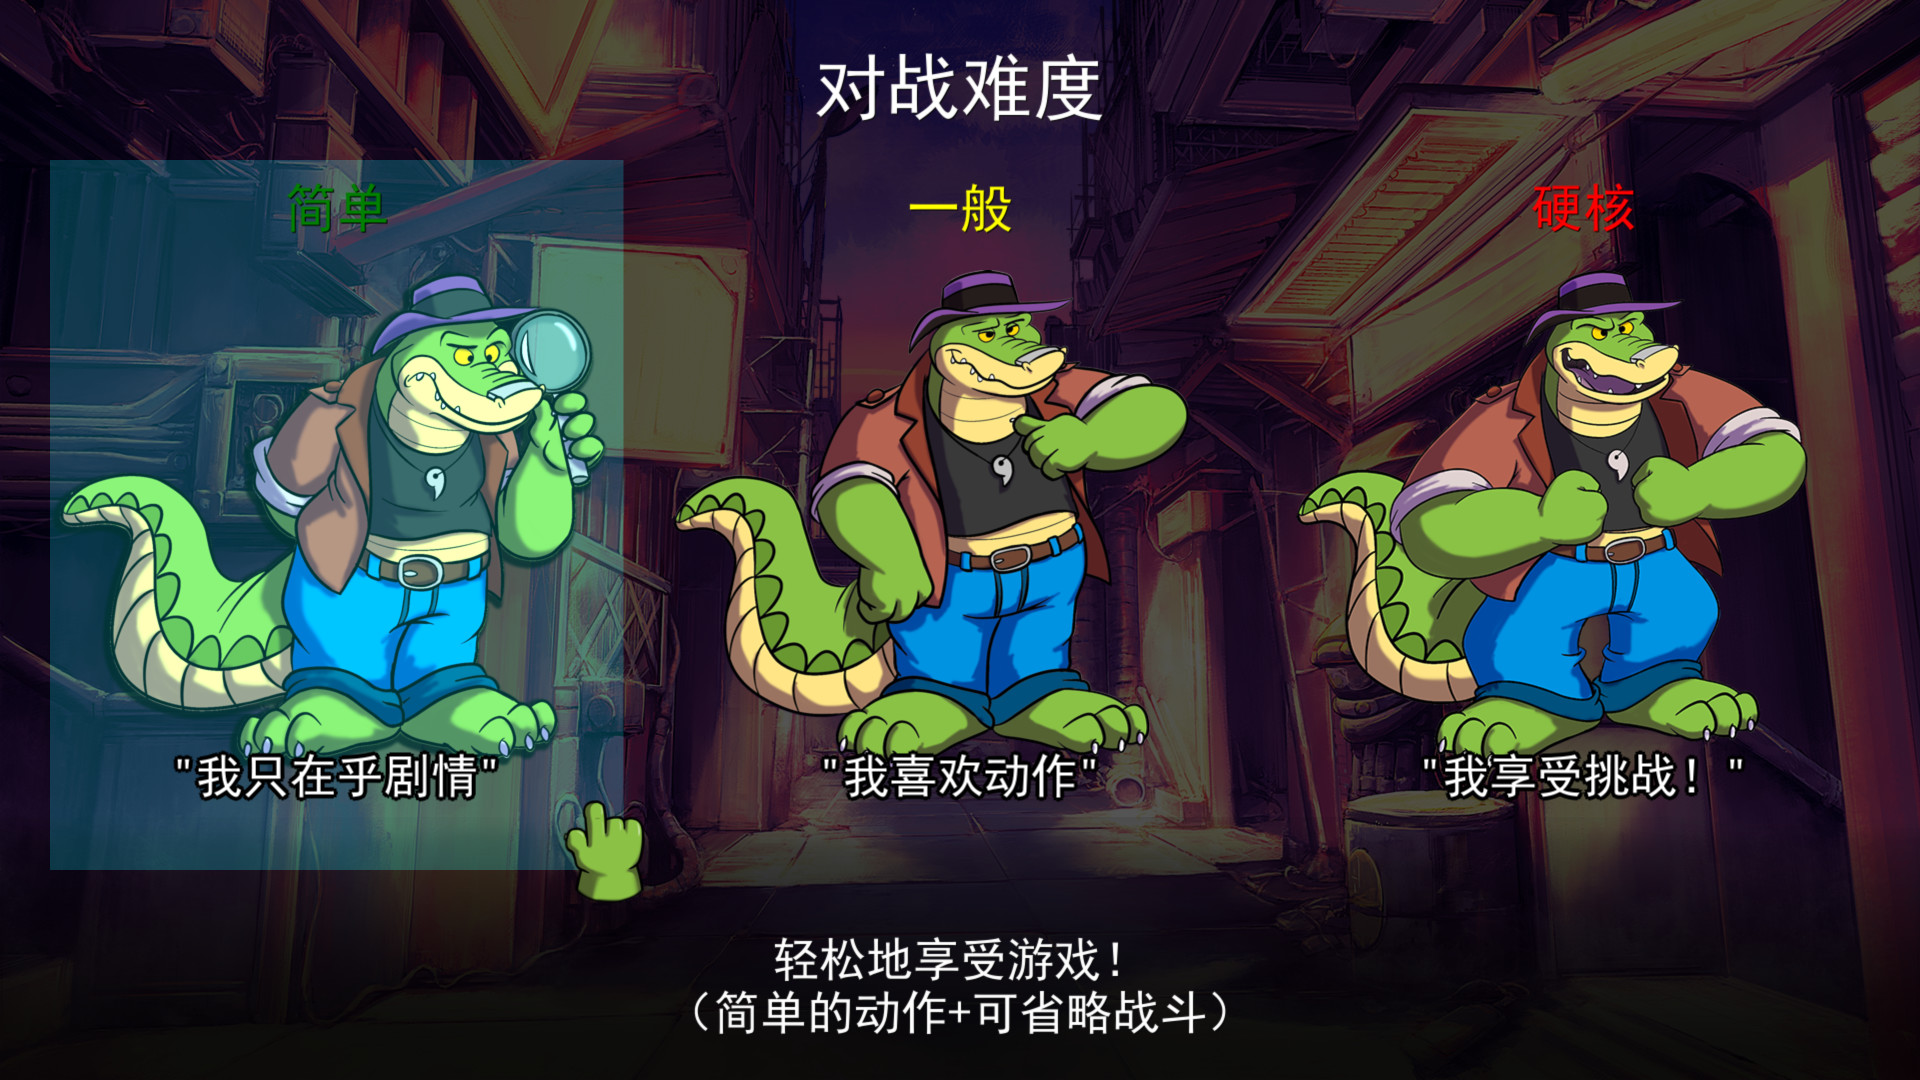 BROK the InvestiGator 鳄鱼侦探布罗格|官方中文|V1.0.8 - 白嫖游戏网_白嫖游戏网